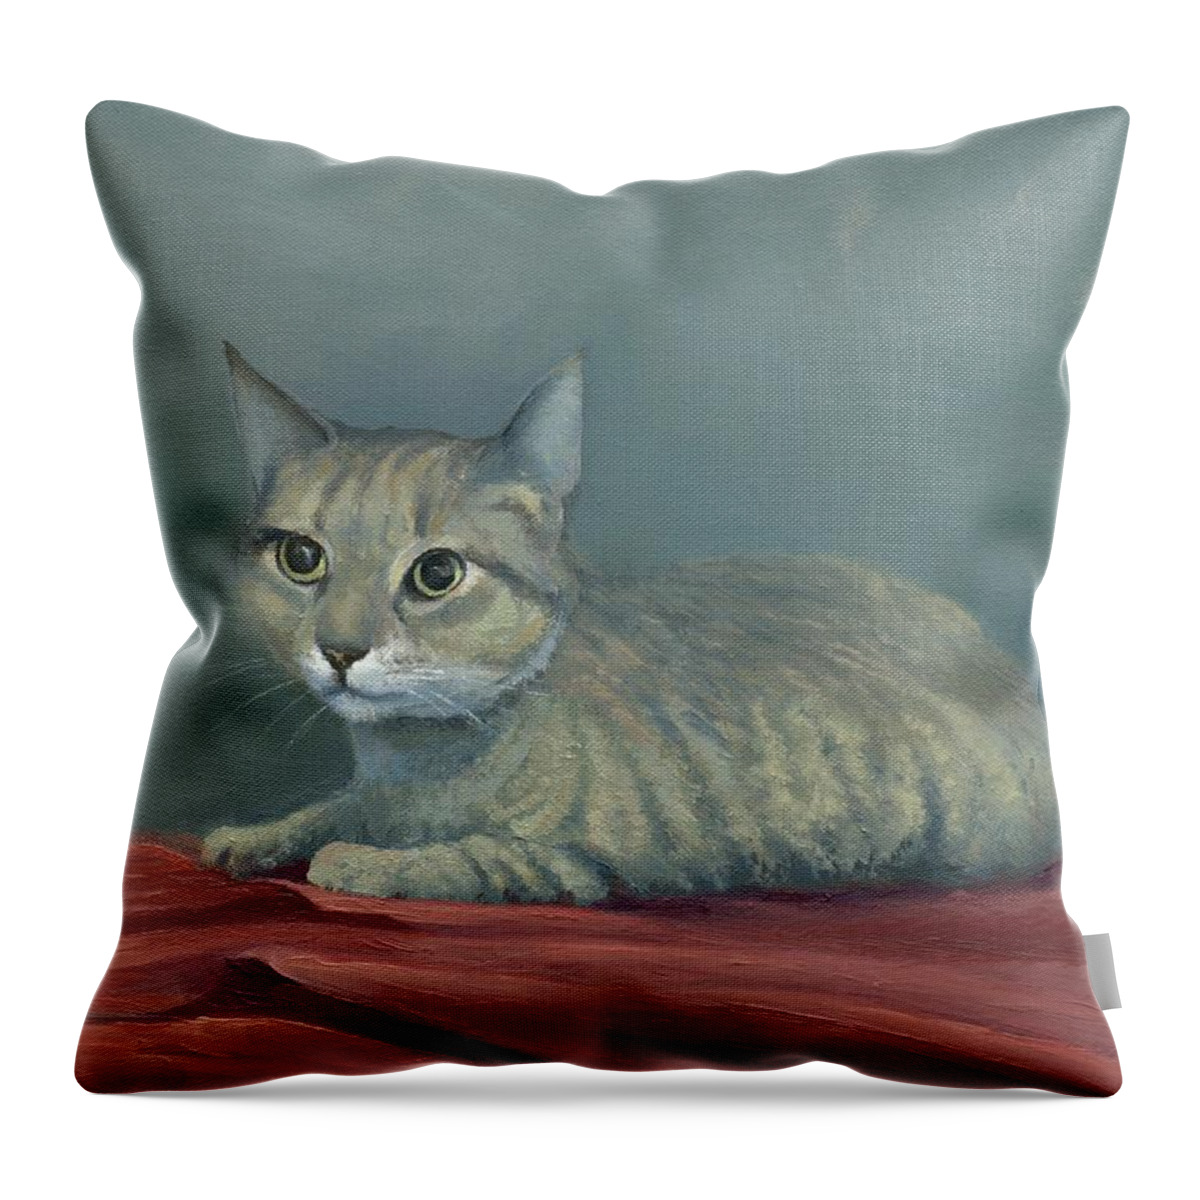 Kitten Throw Pillow featuring the painting Kitten by Richard Picton